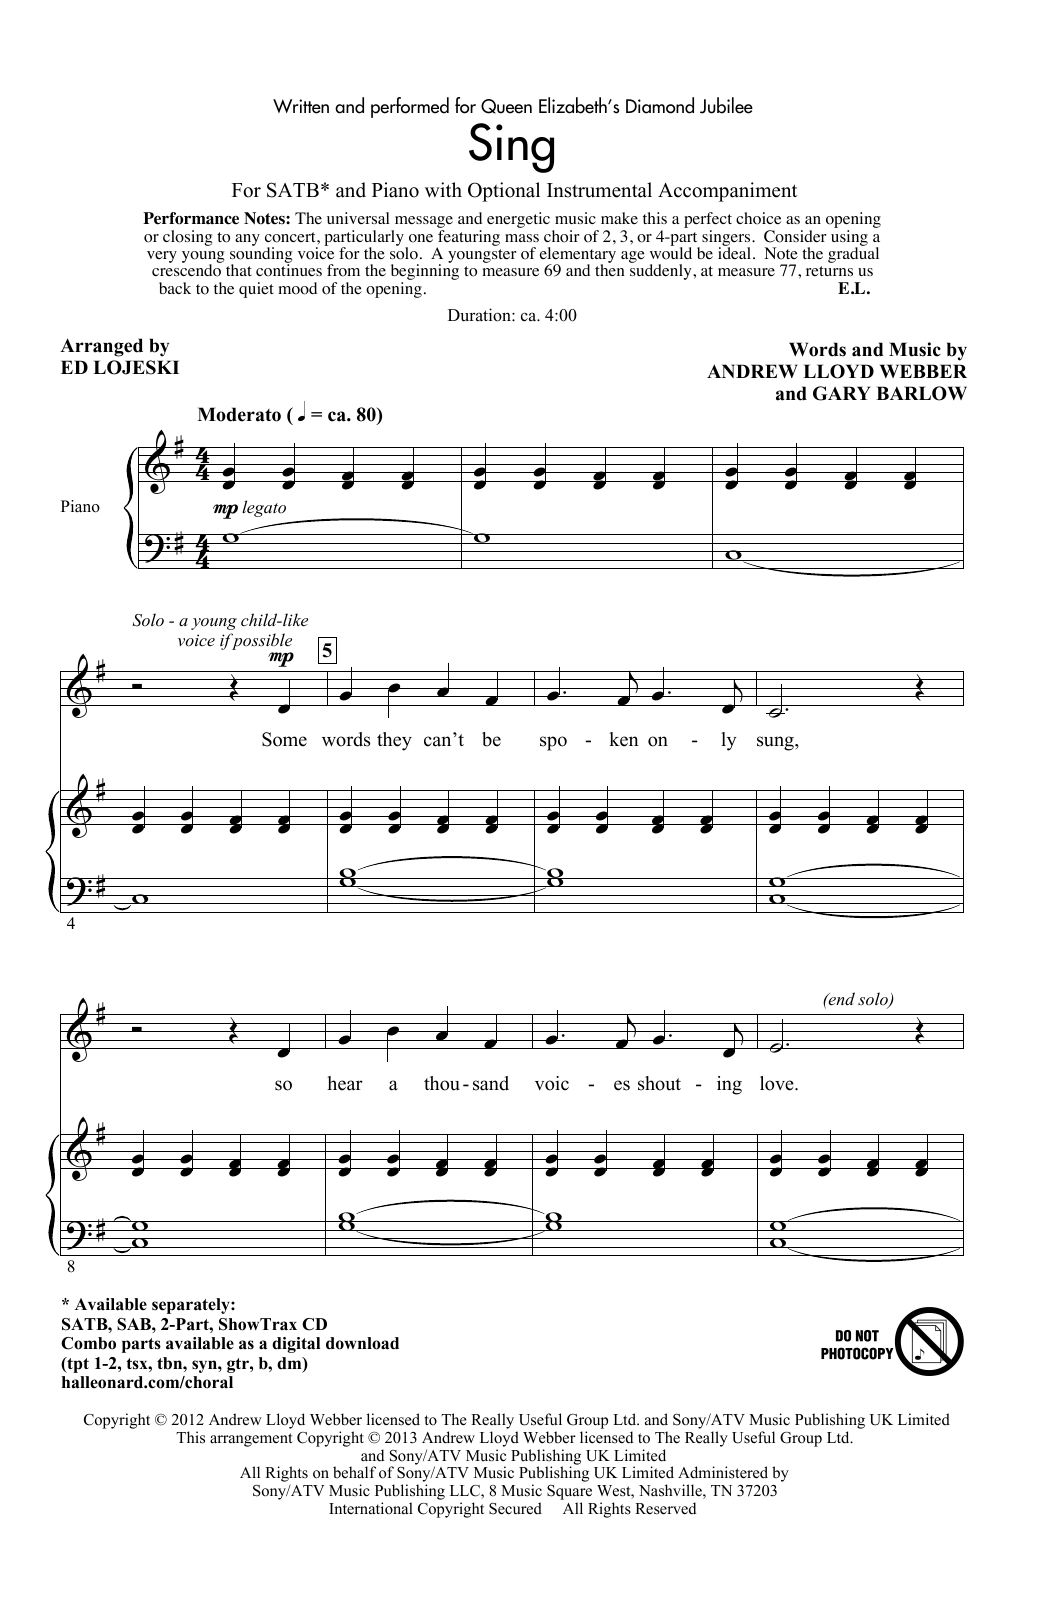 Andrew Lloyd Webber & Gary Barlow Sing (arr. Ed Lojeski) sheet music notes and chords arranged for SATB Choir